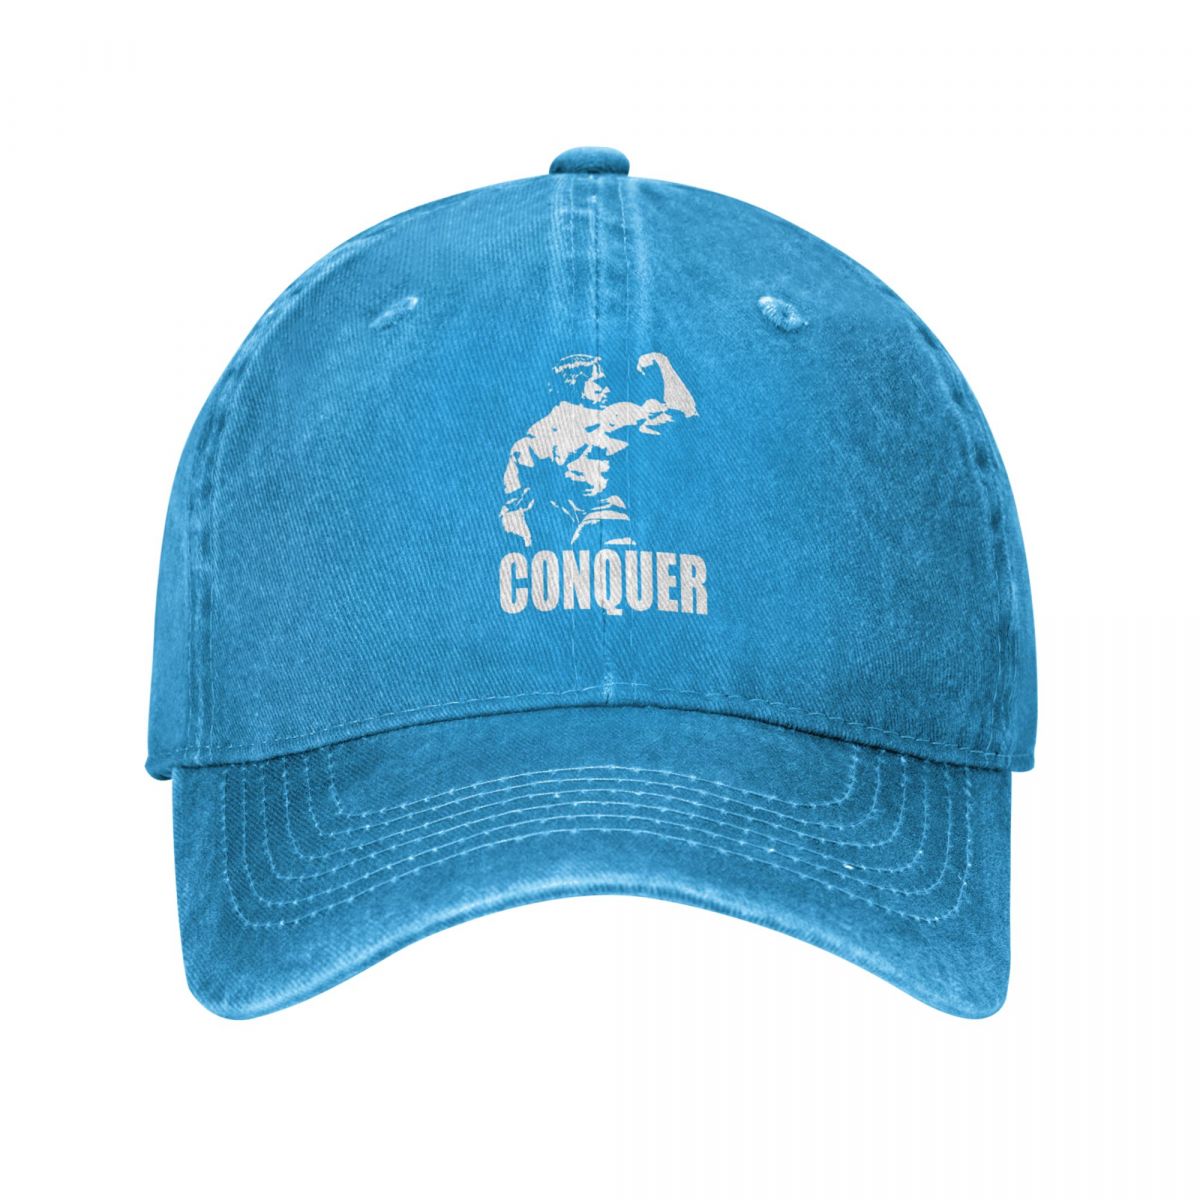 Conquer Arnold Schwarzenegger - Snapback Baseball Cap - Summer Hat For Men and Women-Blue-One Size-